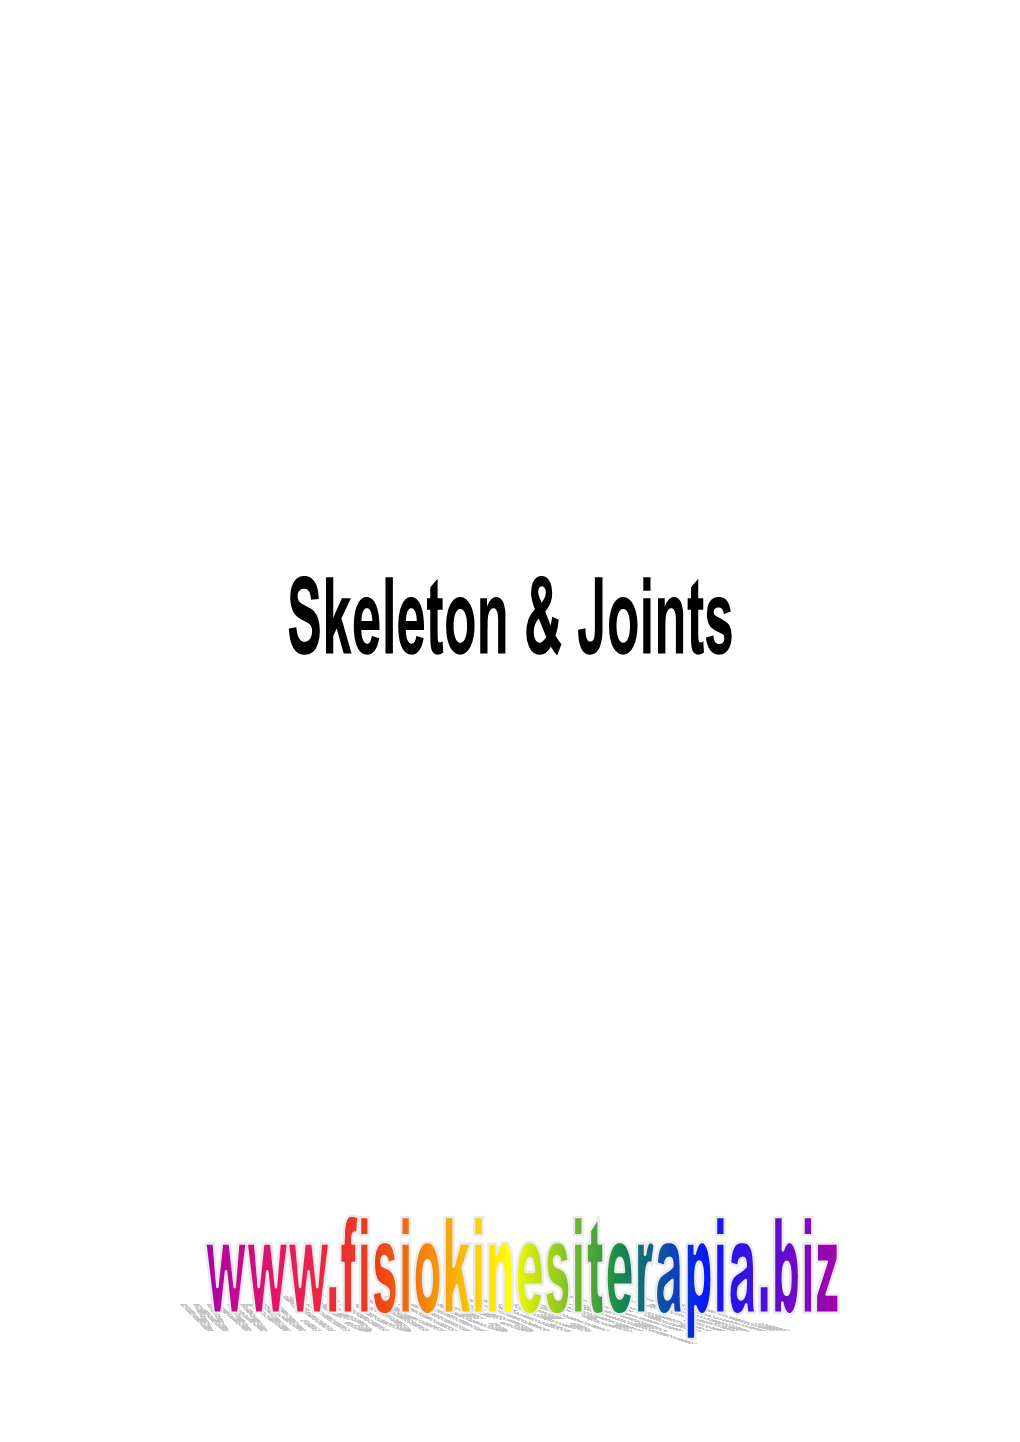 Skeleton & Joints